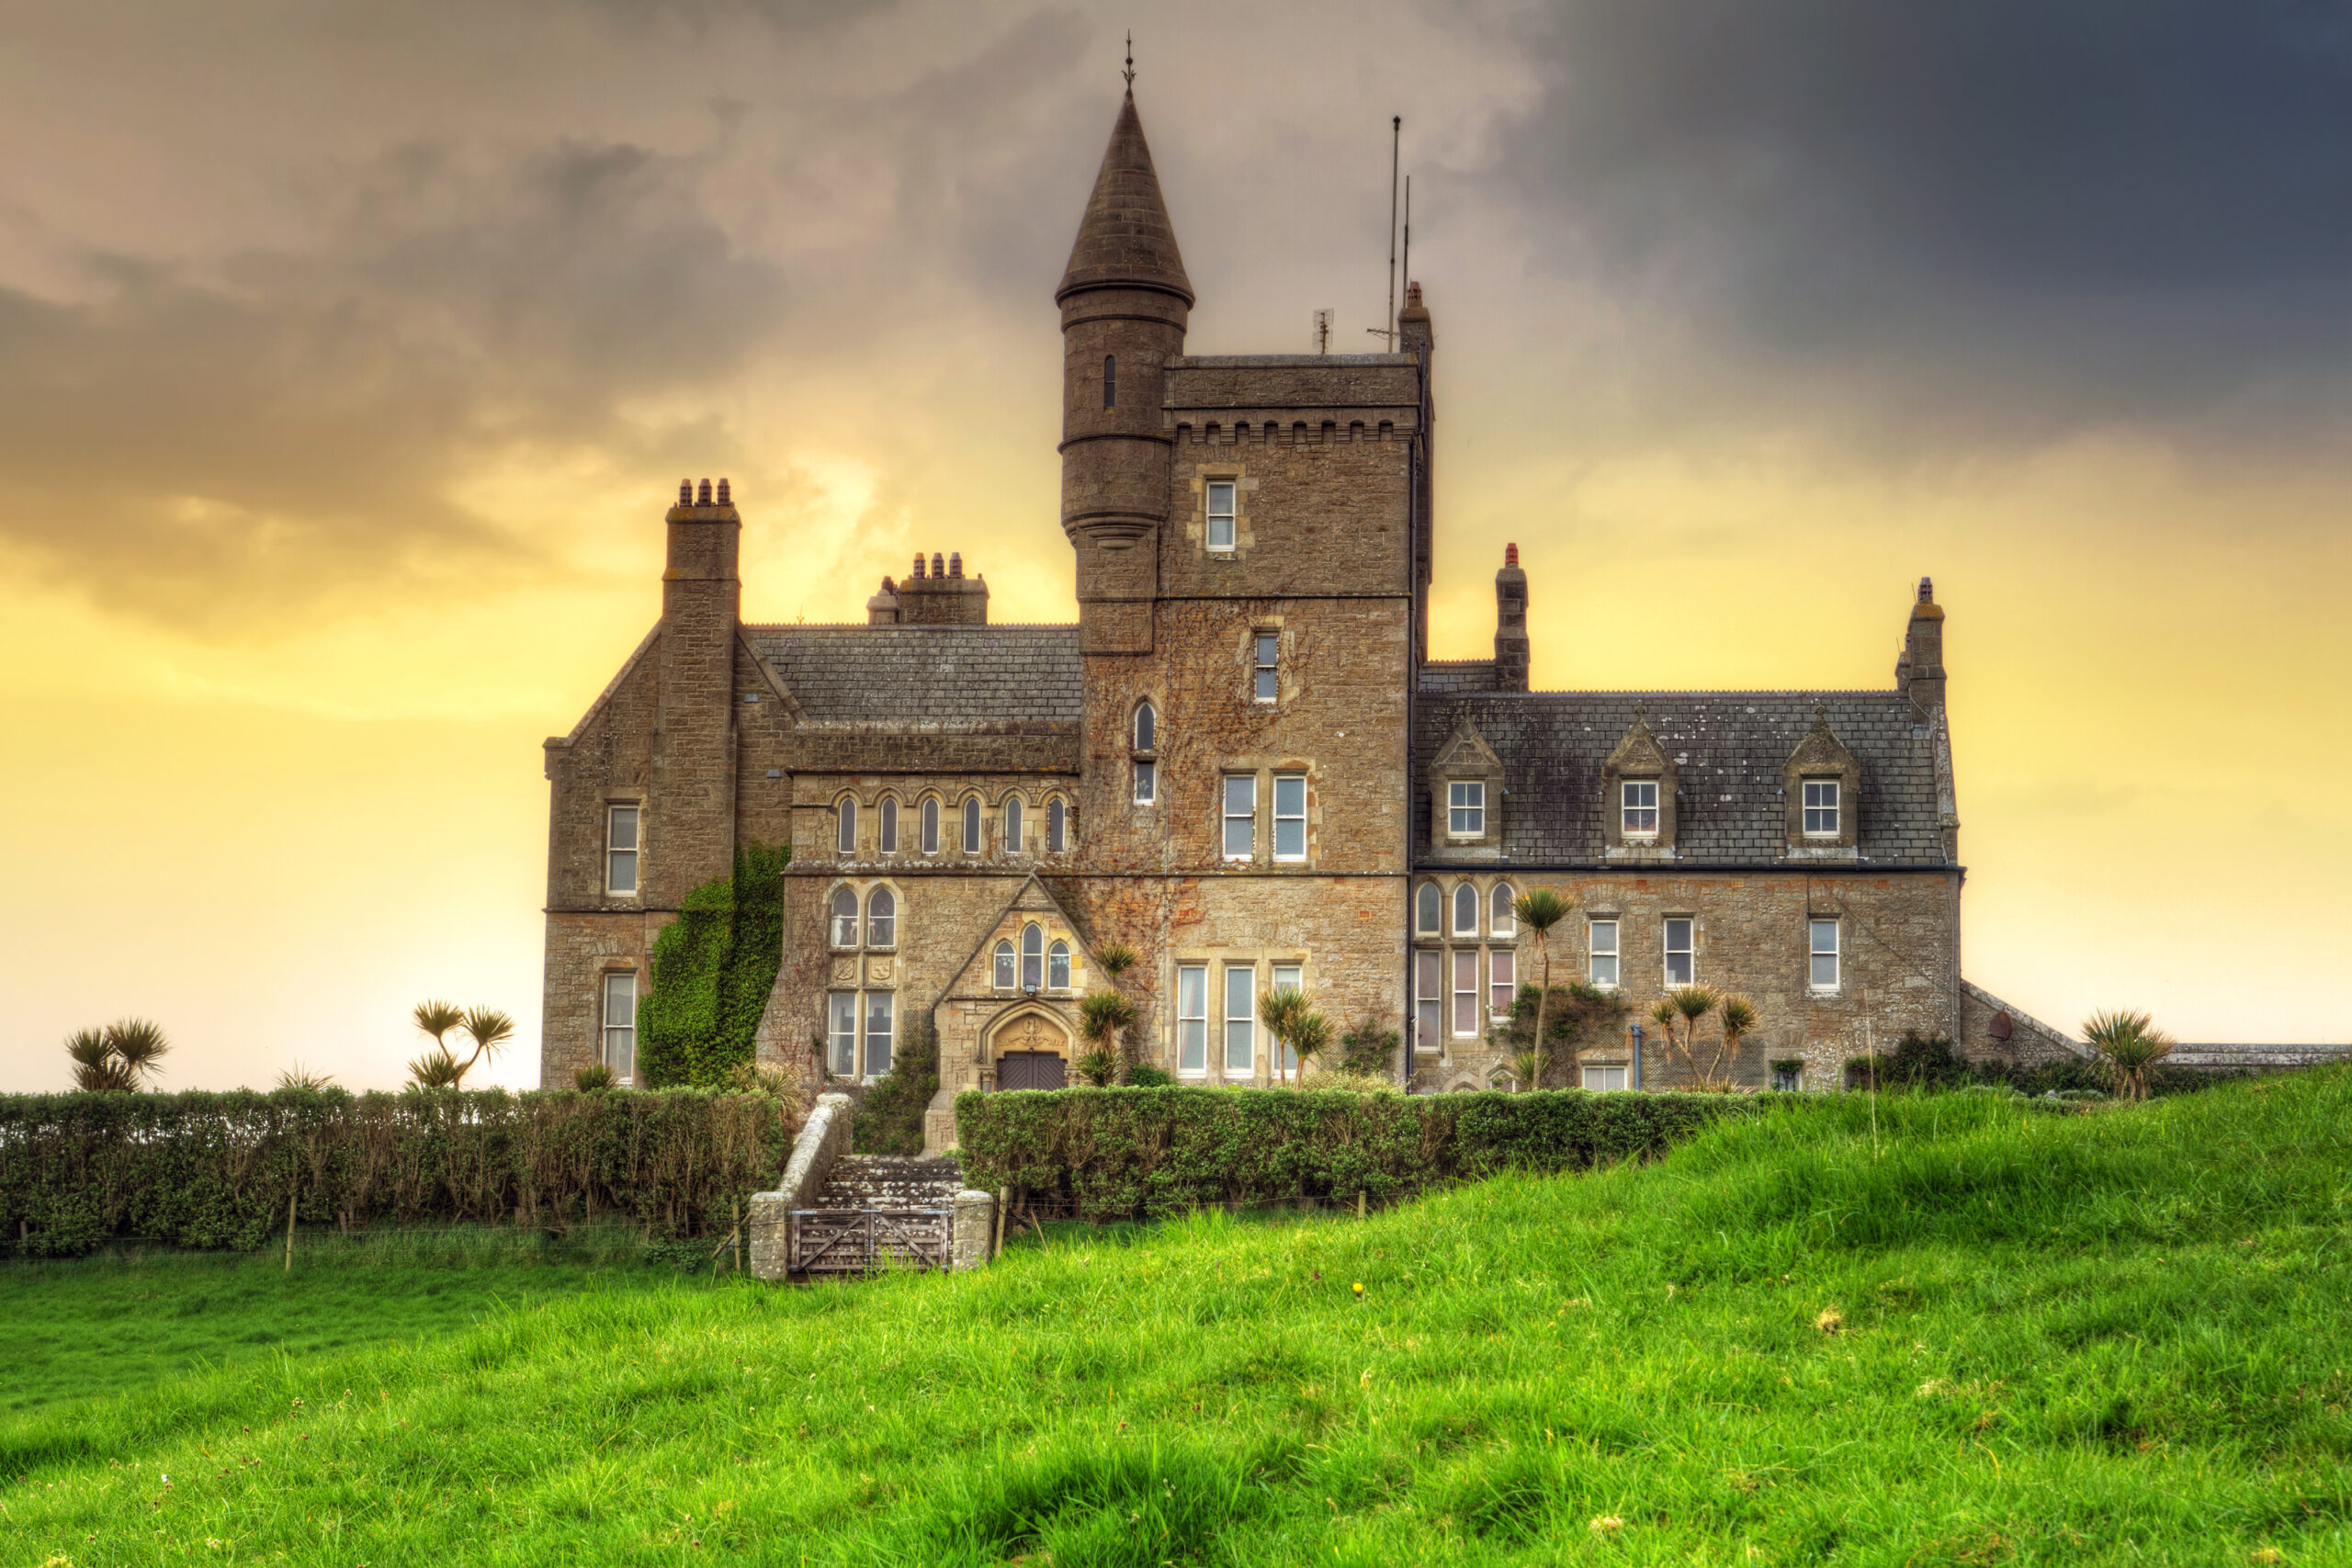 One of the prettiest views in Ireland is of Classiebawn Castle